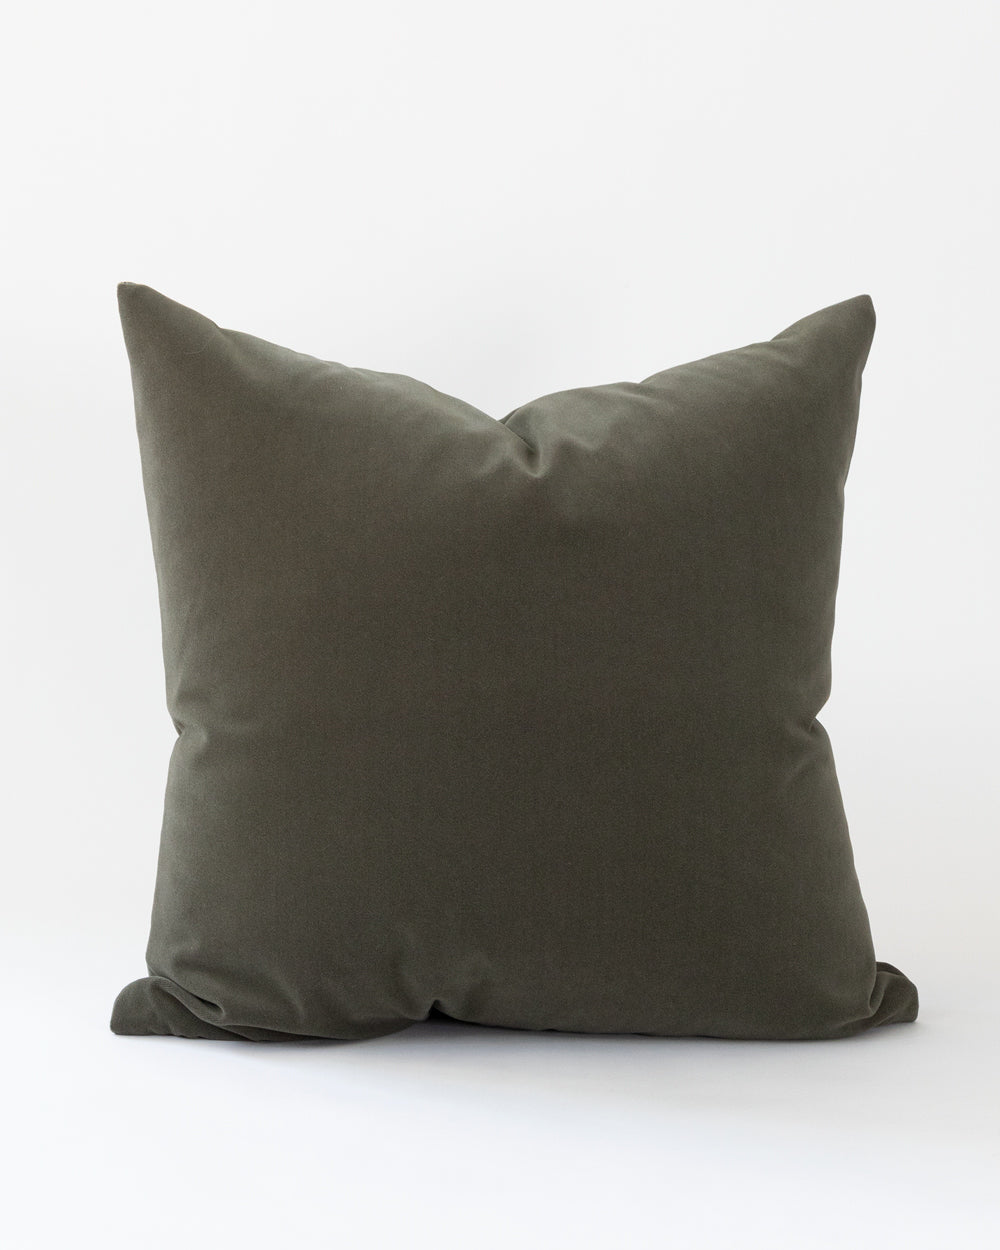 Dark forest green velvet pillow has a matte look rather than shiny